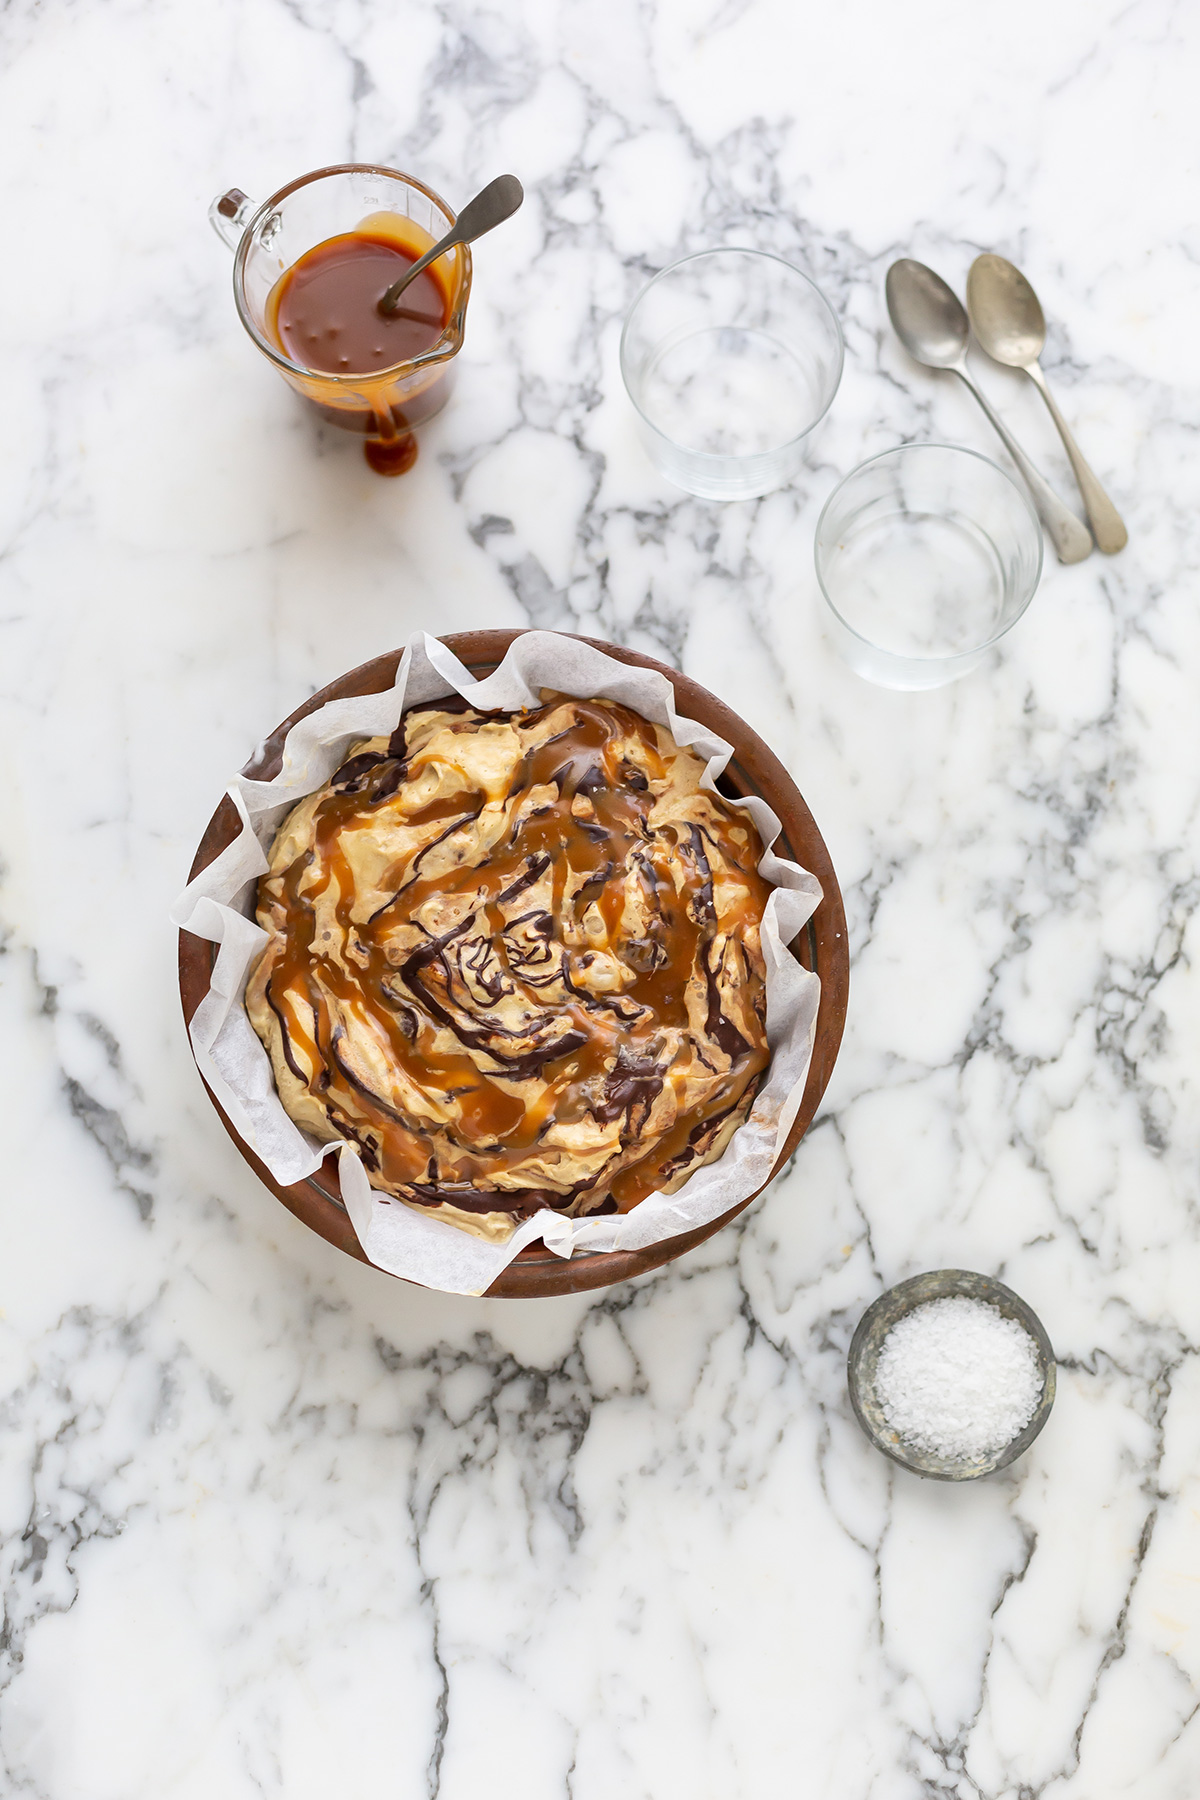 Liquorice ice cream with chocolate & salted caramel swirl recipe